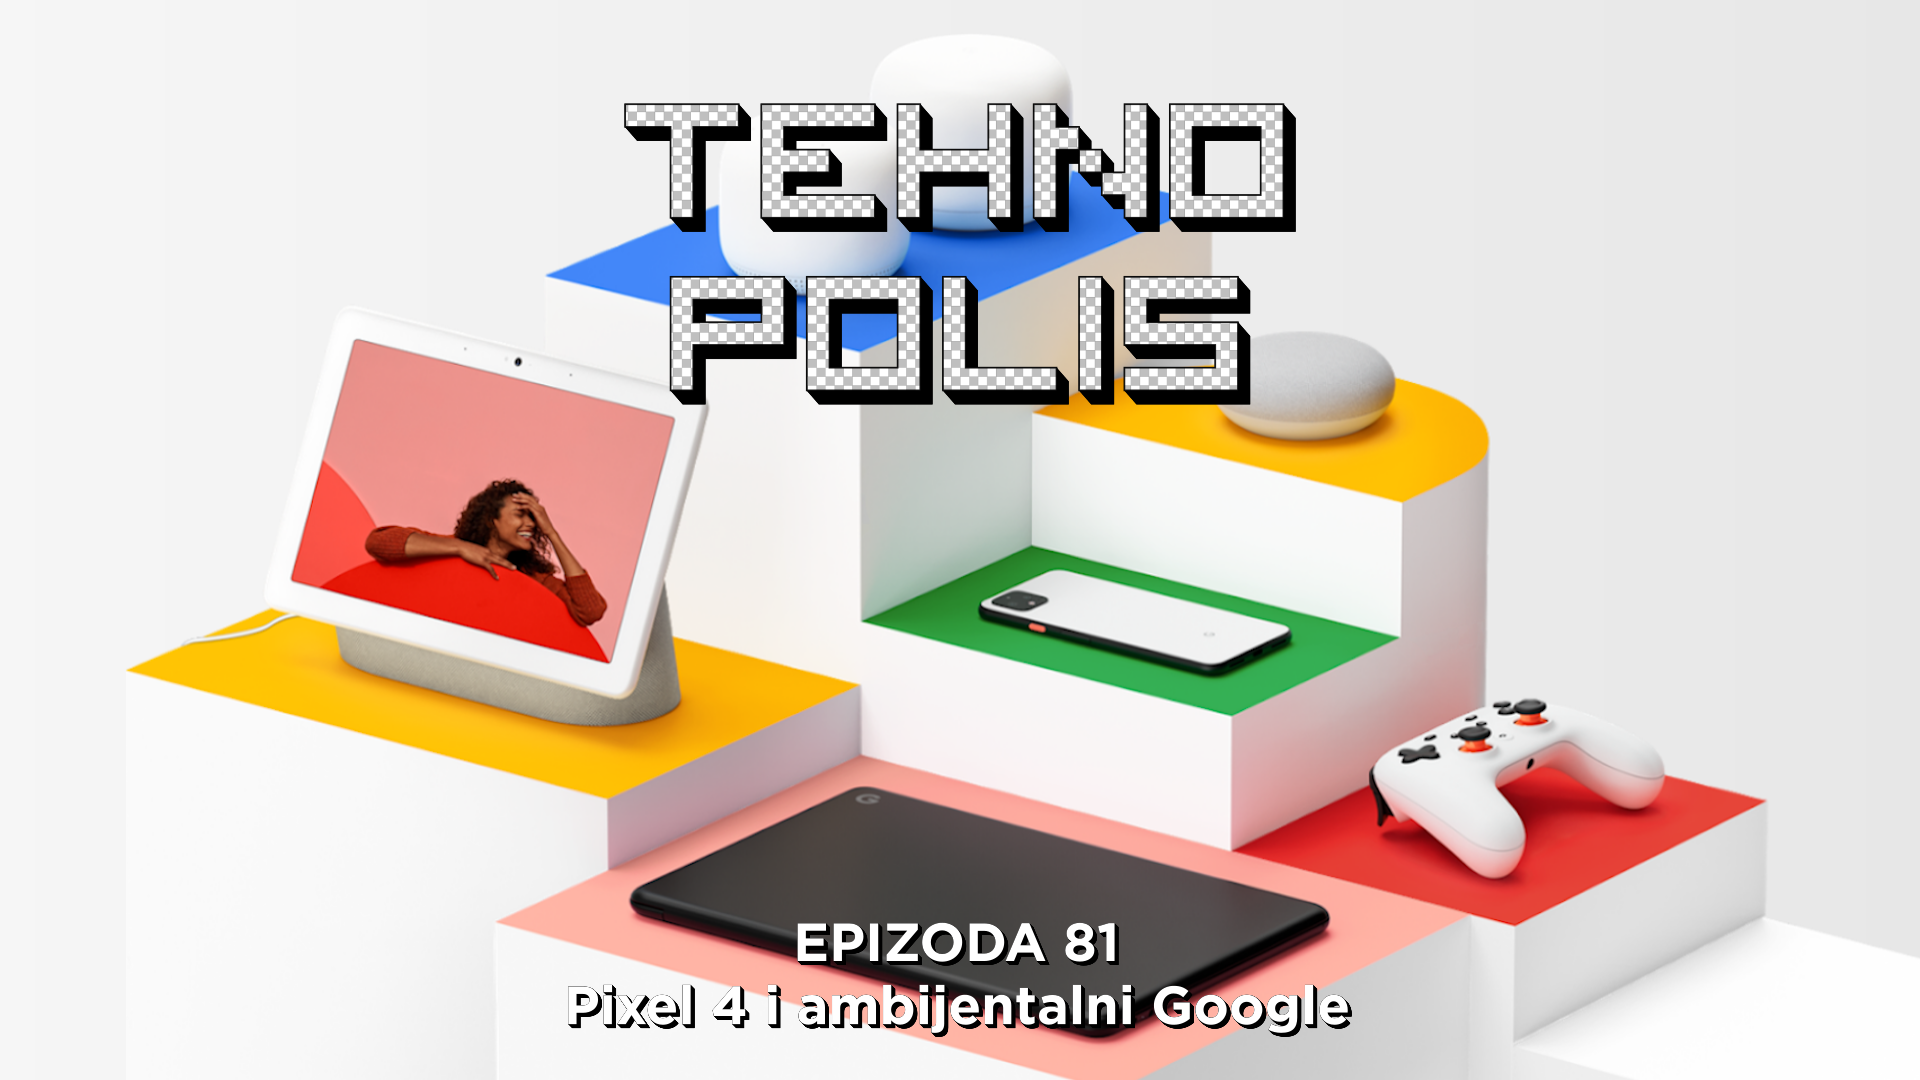 Tehnopolis 81: Pixel 4 i ambijentalni Google